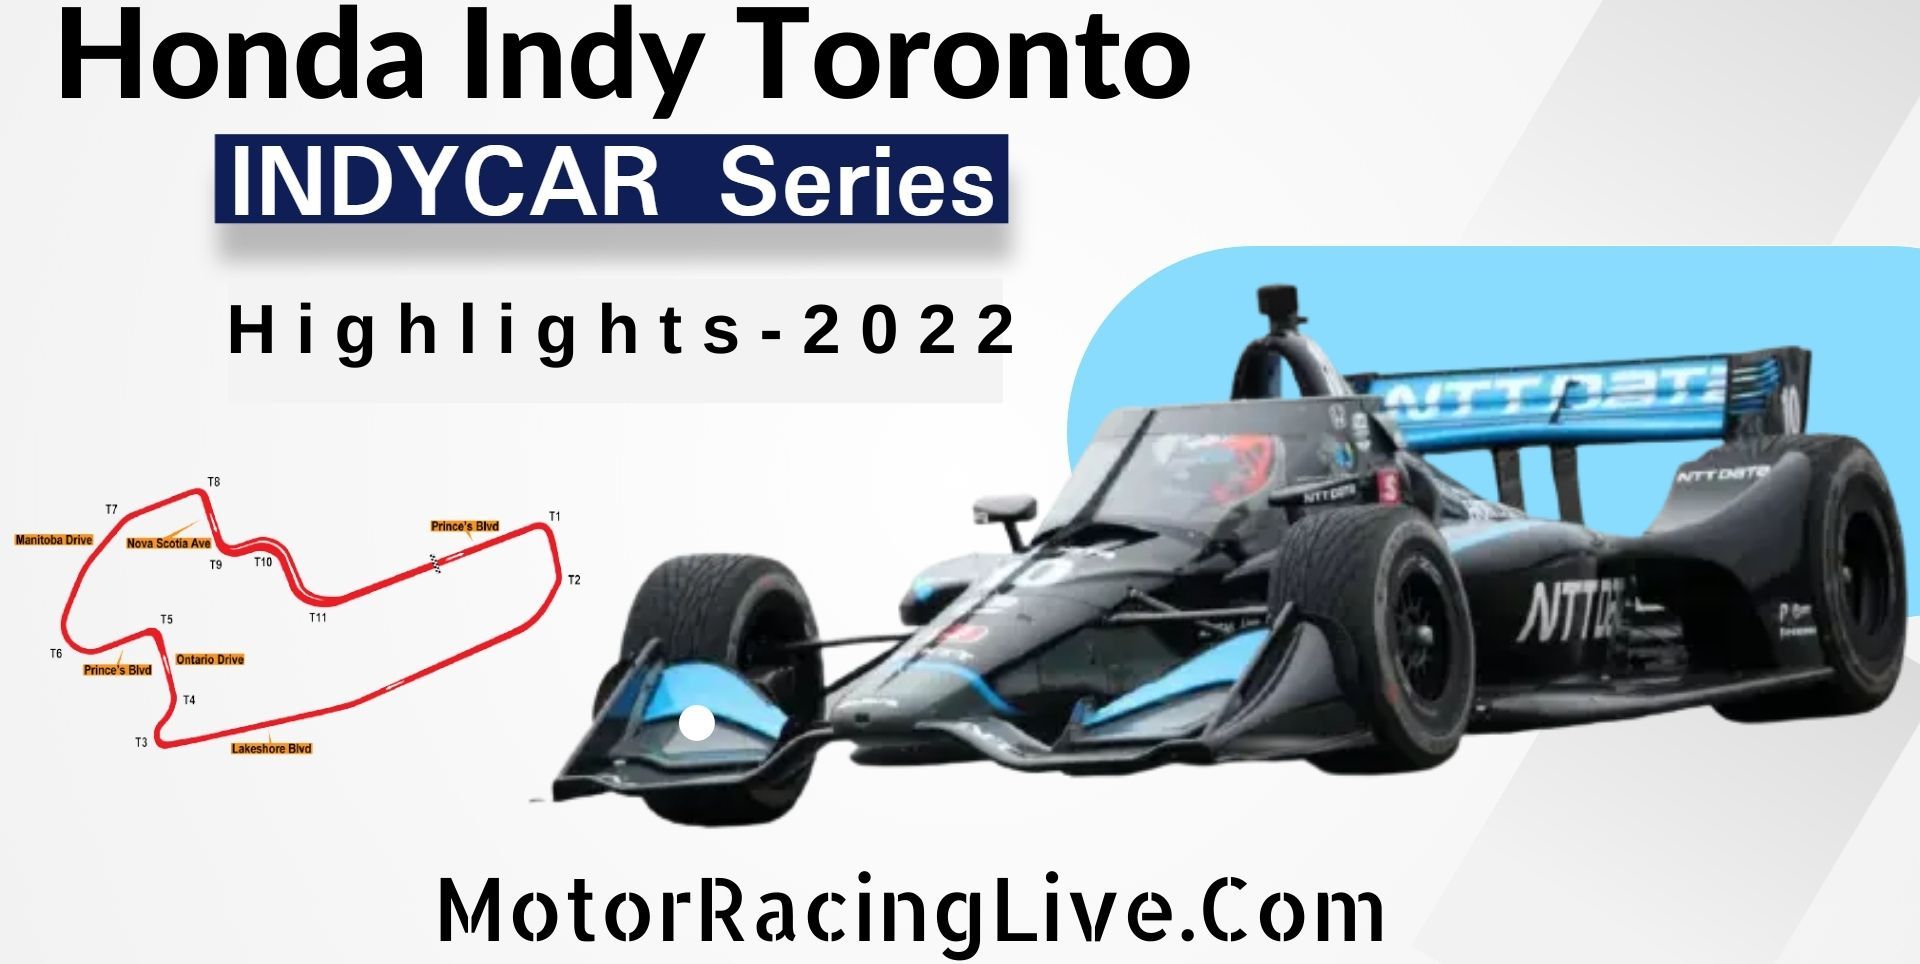 Honda Indy Toronto Highlights 2022 Indycar